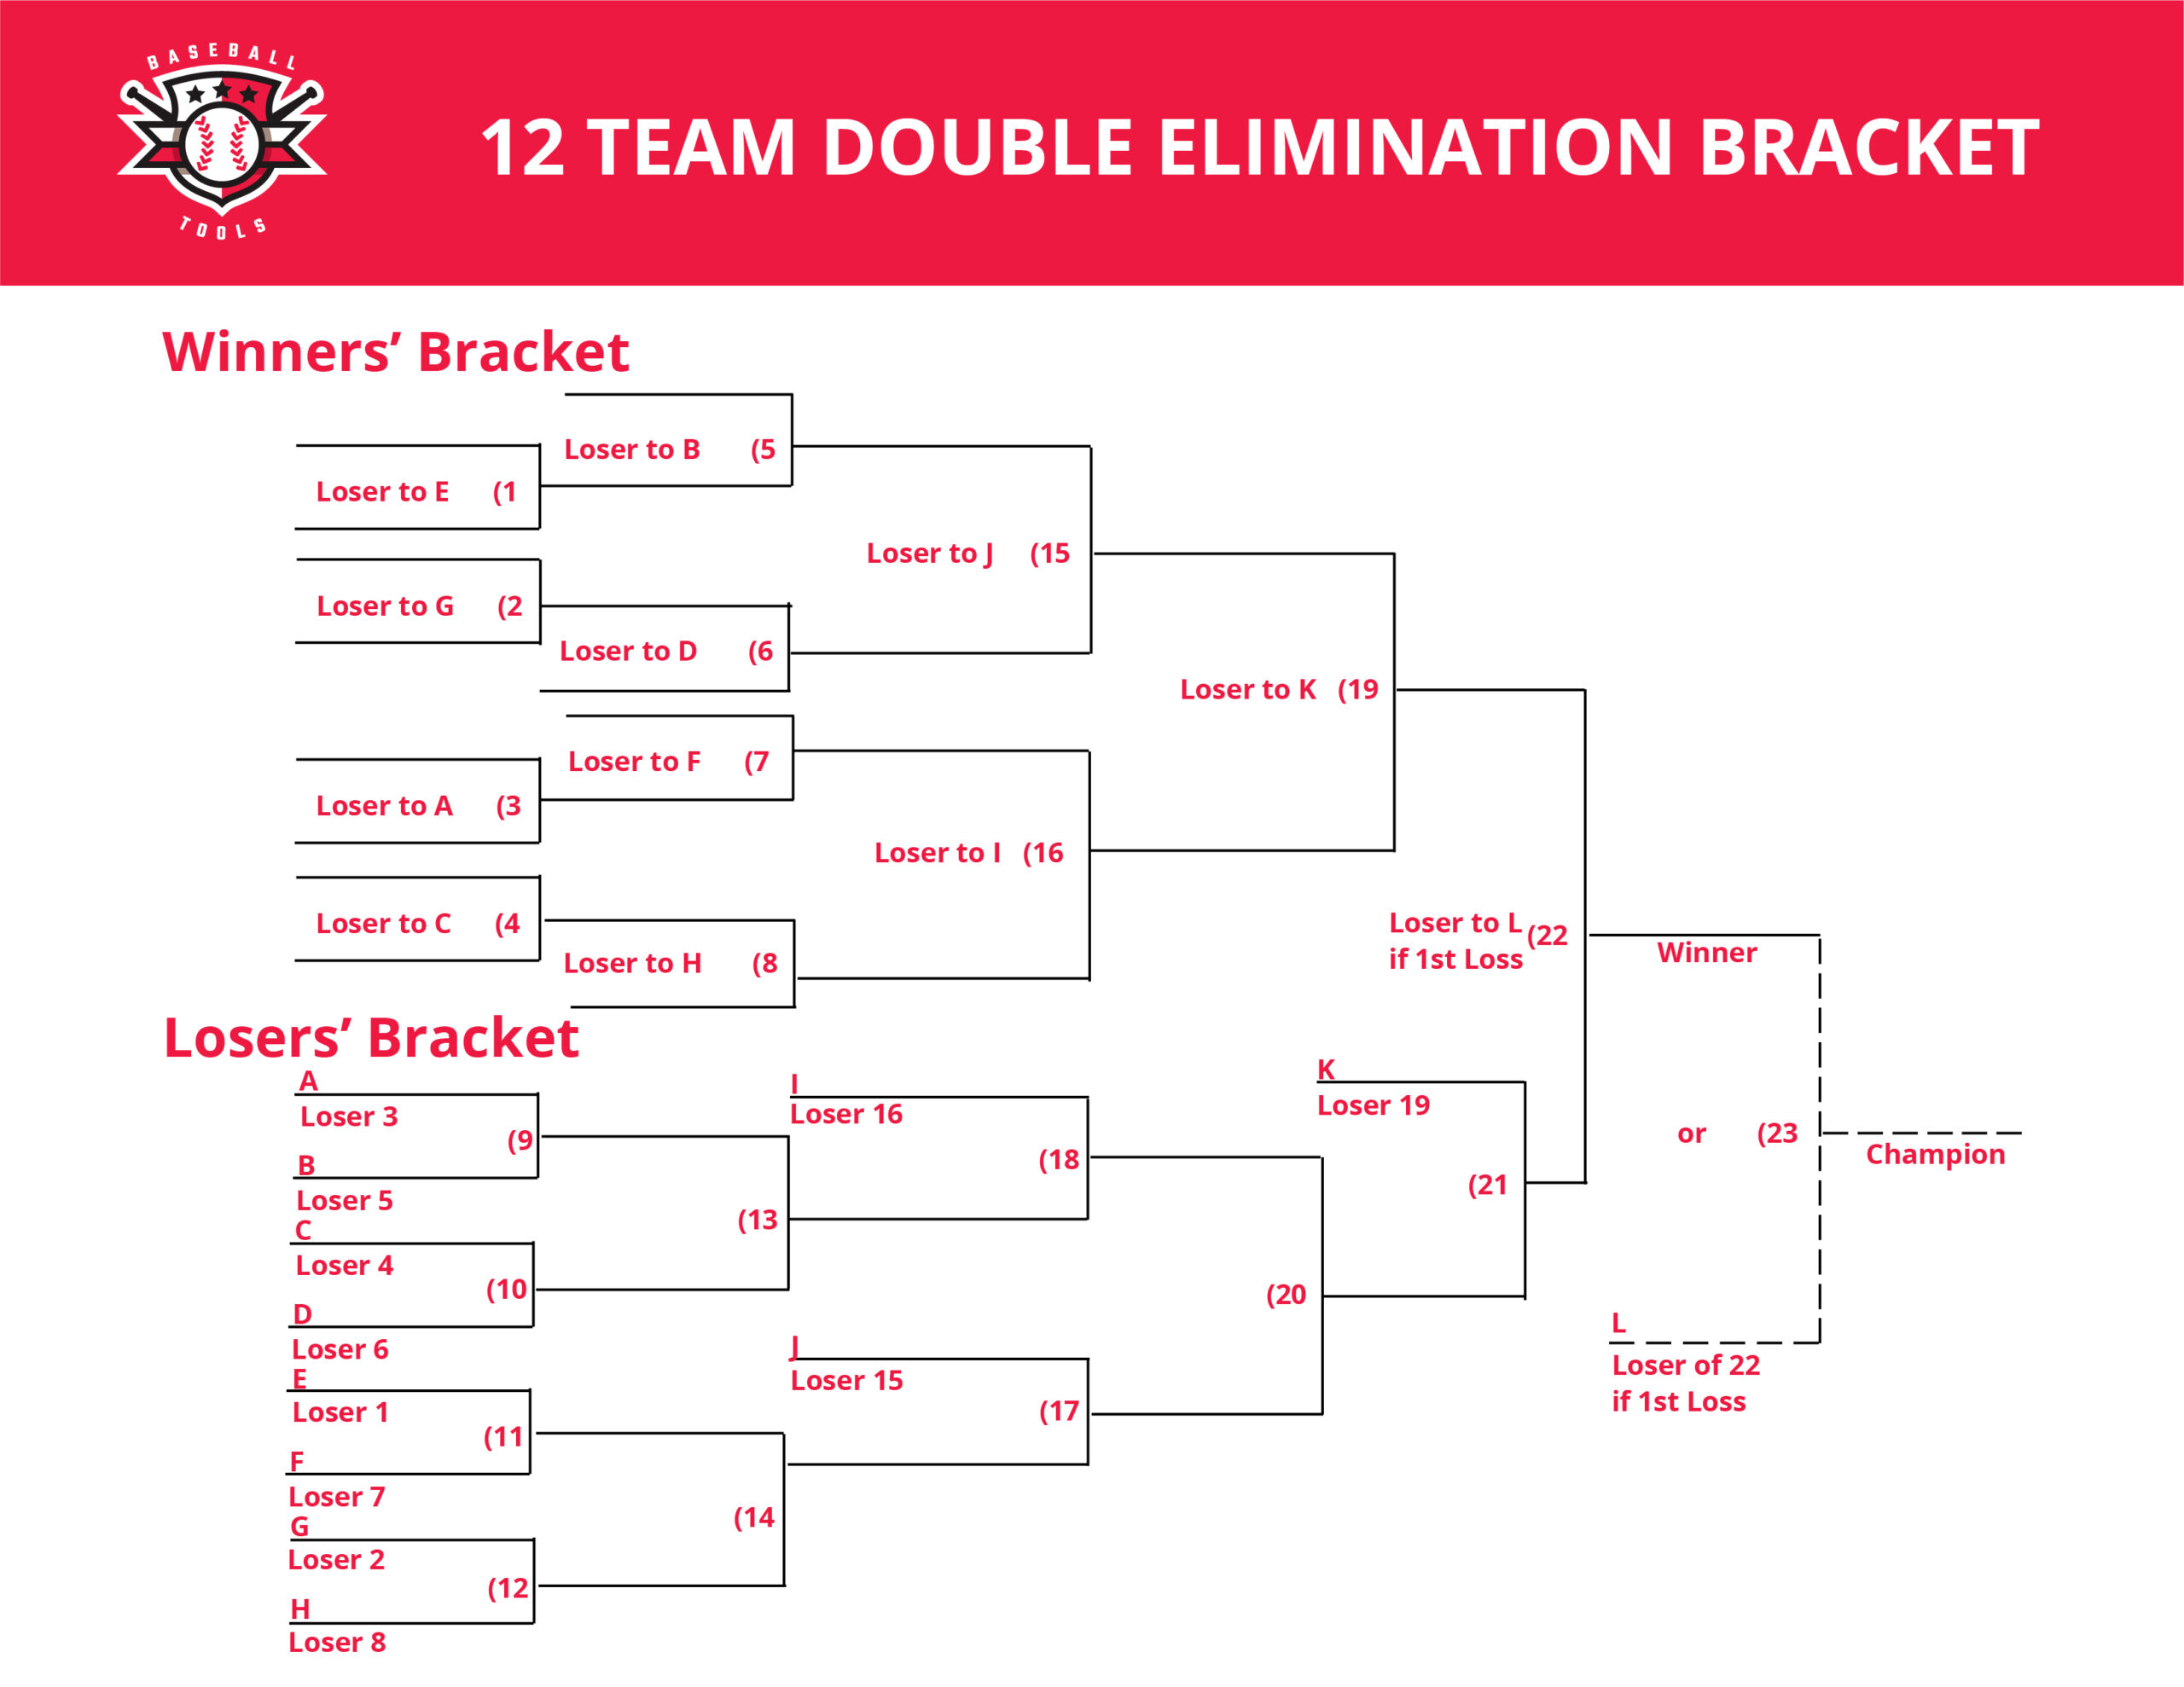 12 Team Double Elimination Bracket Baseball tools